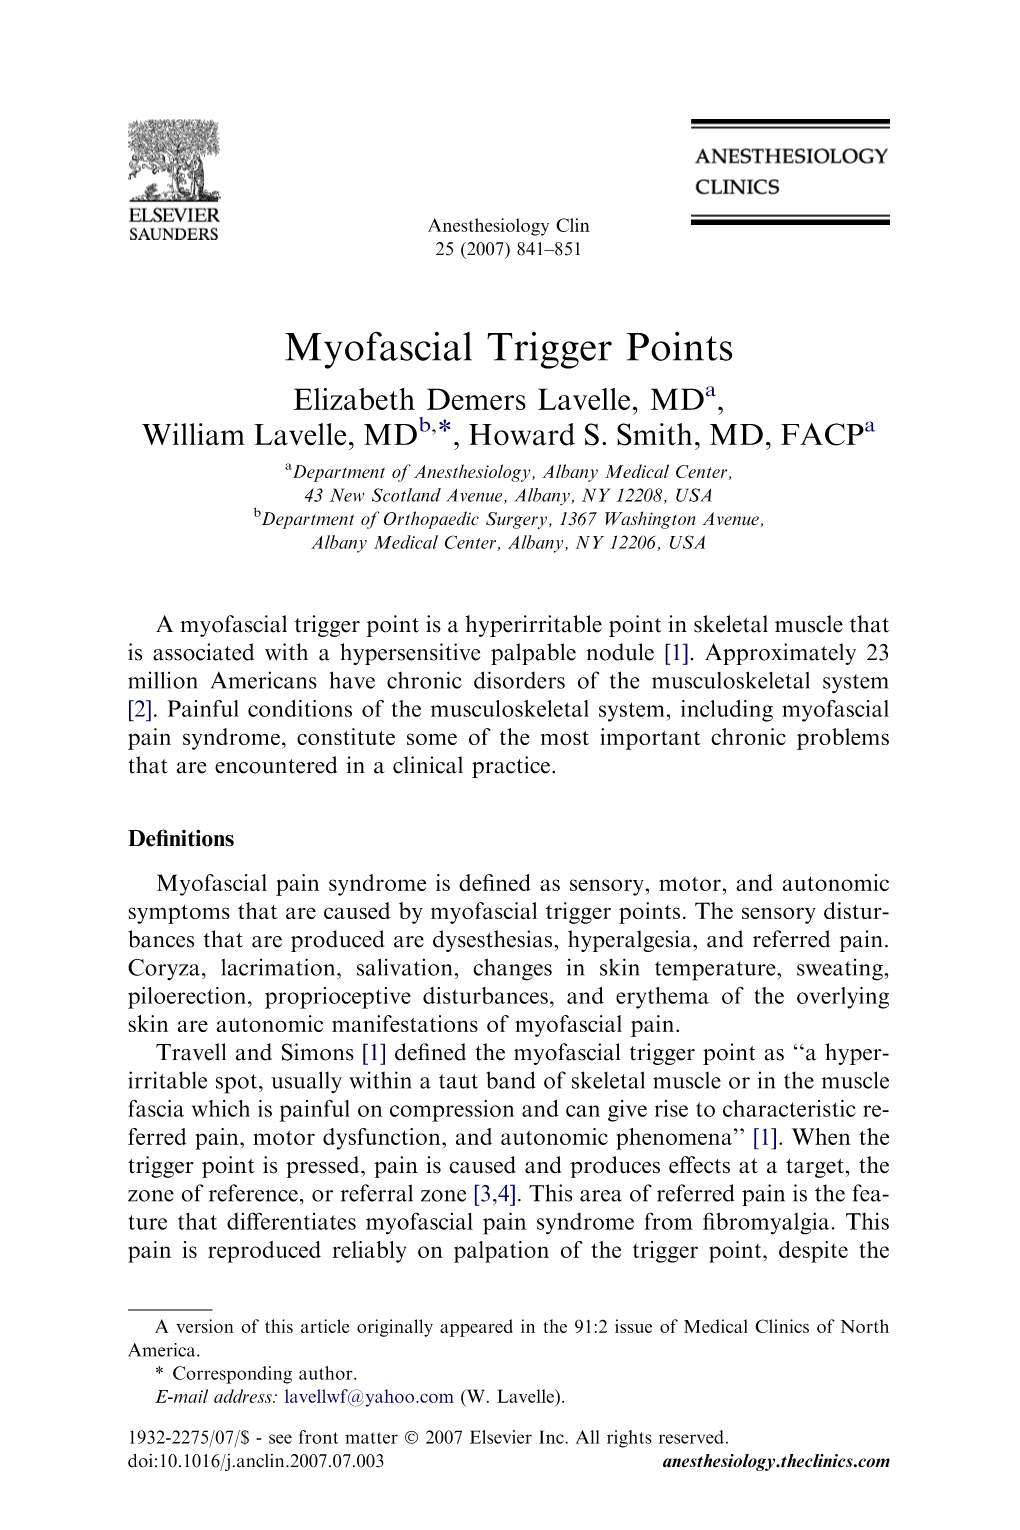 Myofascial Trigger Points Elizabeth Demers Lavelle, Mda, William Lavelle, Mdb,*, Howard S